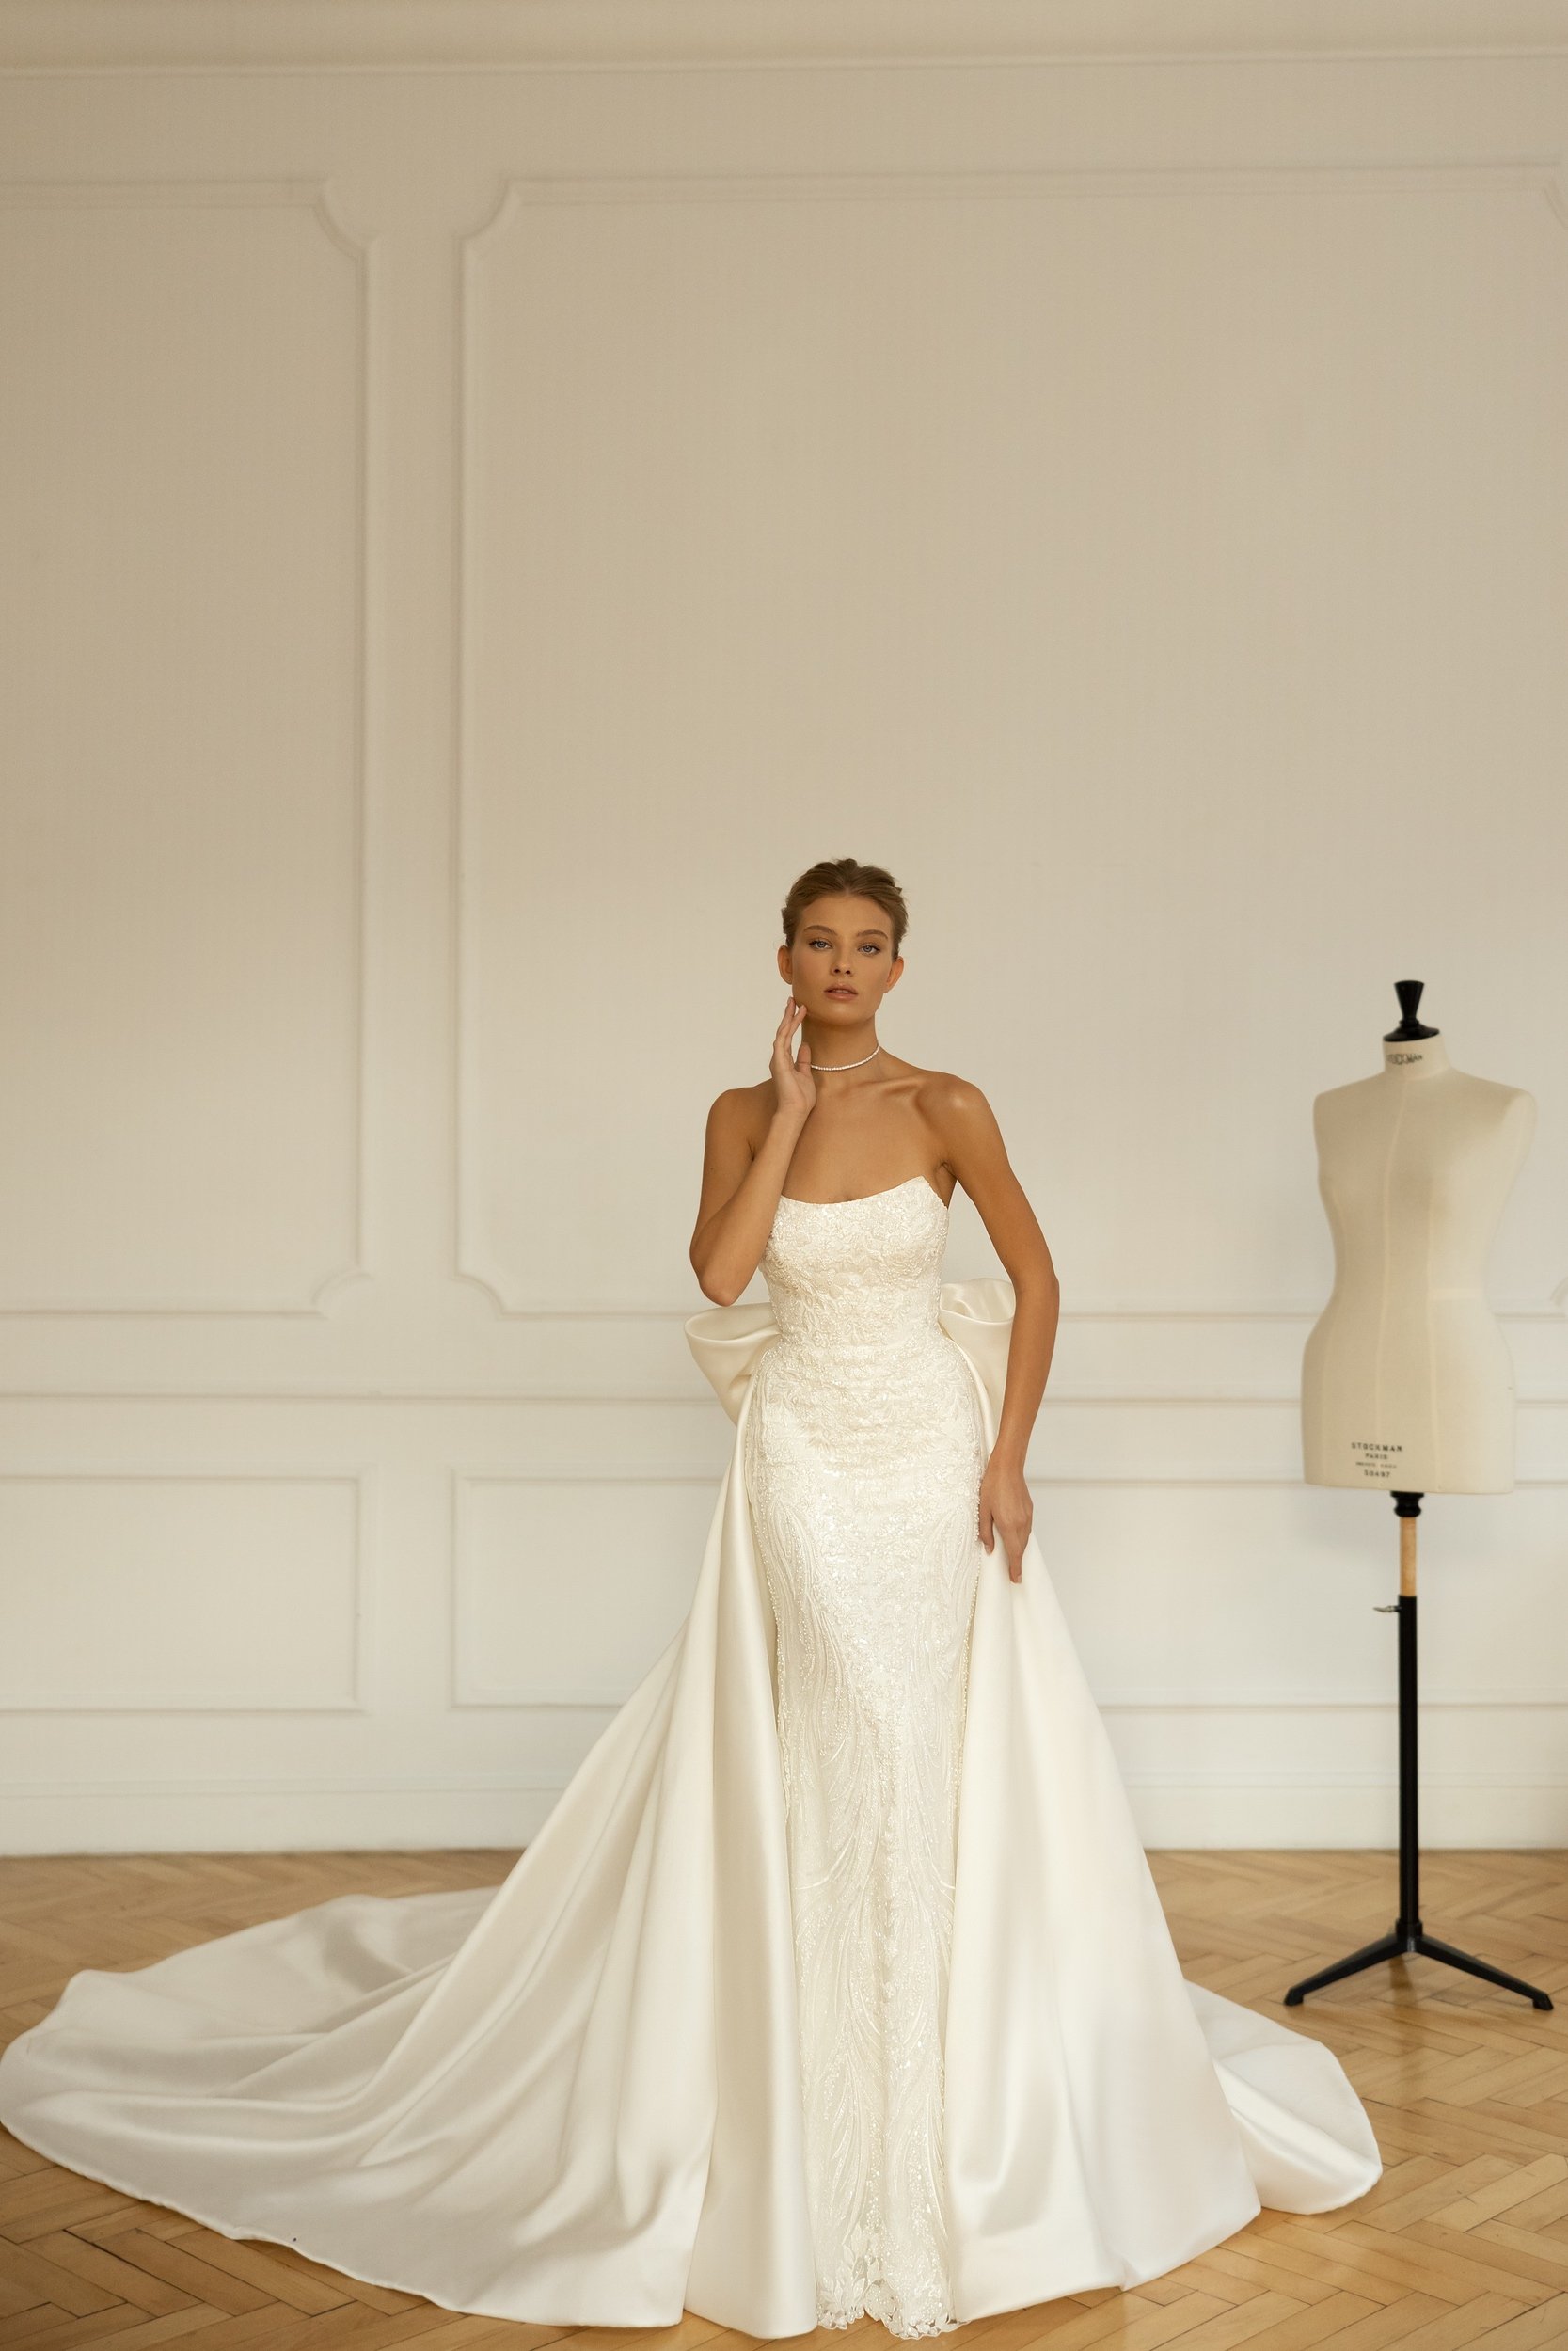 Blanc-de-blanc-bridal-boutique-pittsburgh-dress-wedding-gown-pittsburgh-cleveland-eva-lendel-lanvee.jpg